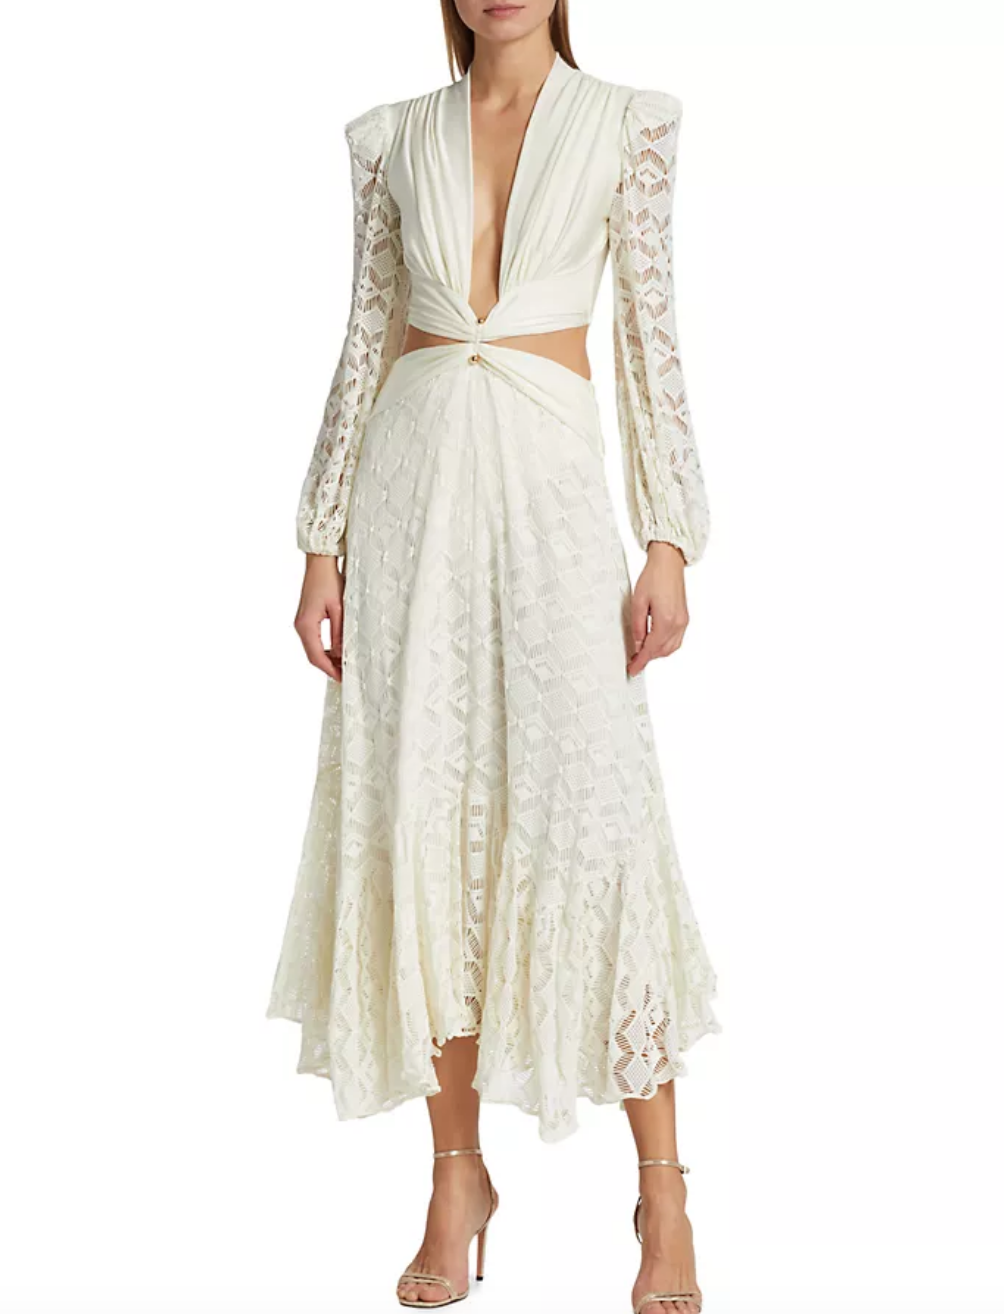 Dolores Catania's White Crochet Cutout Dress